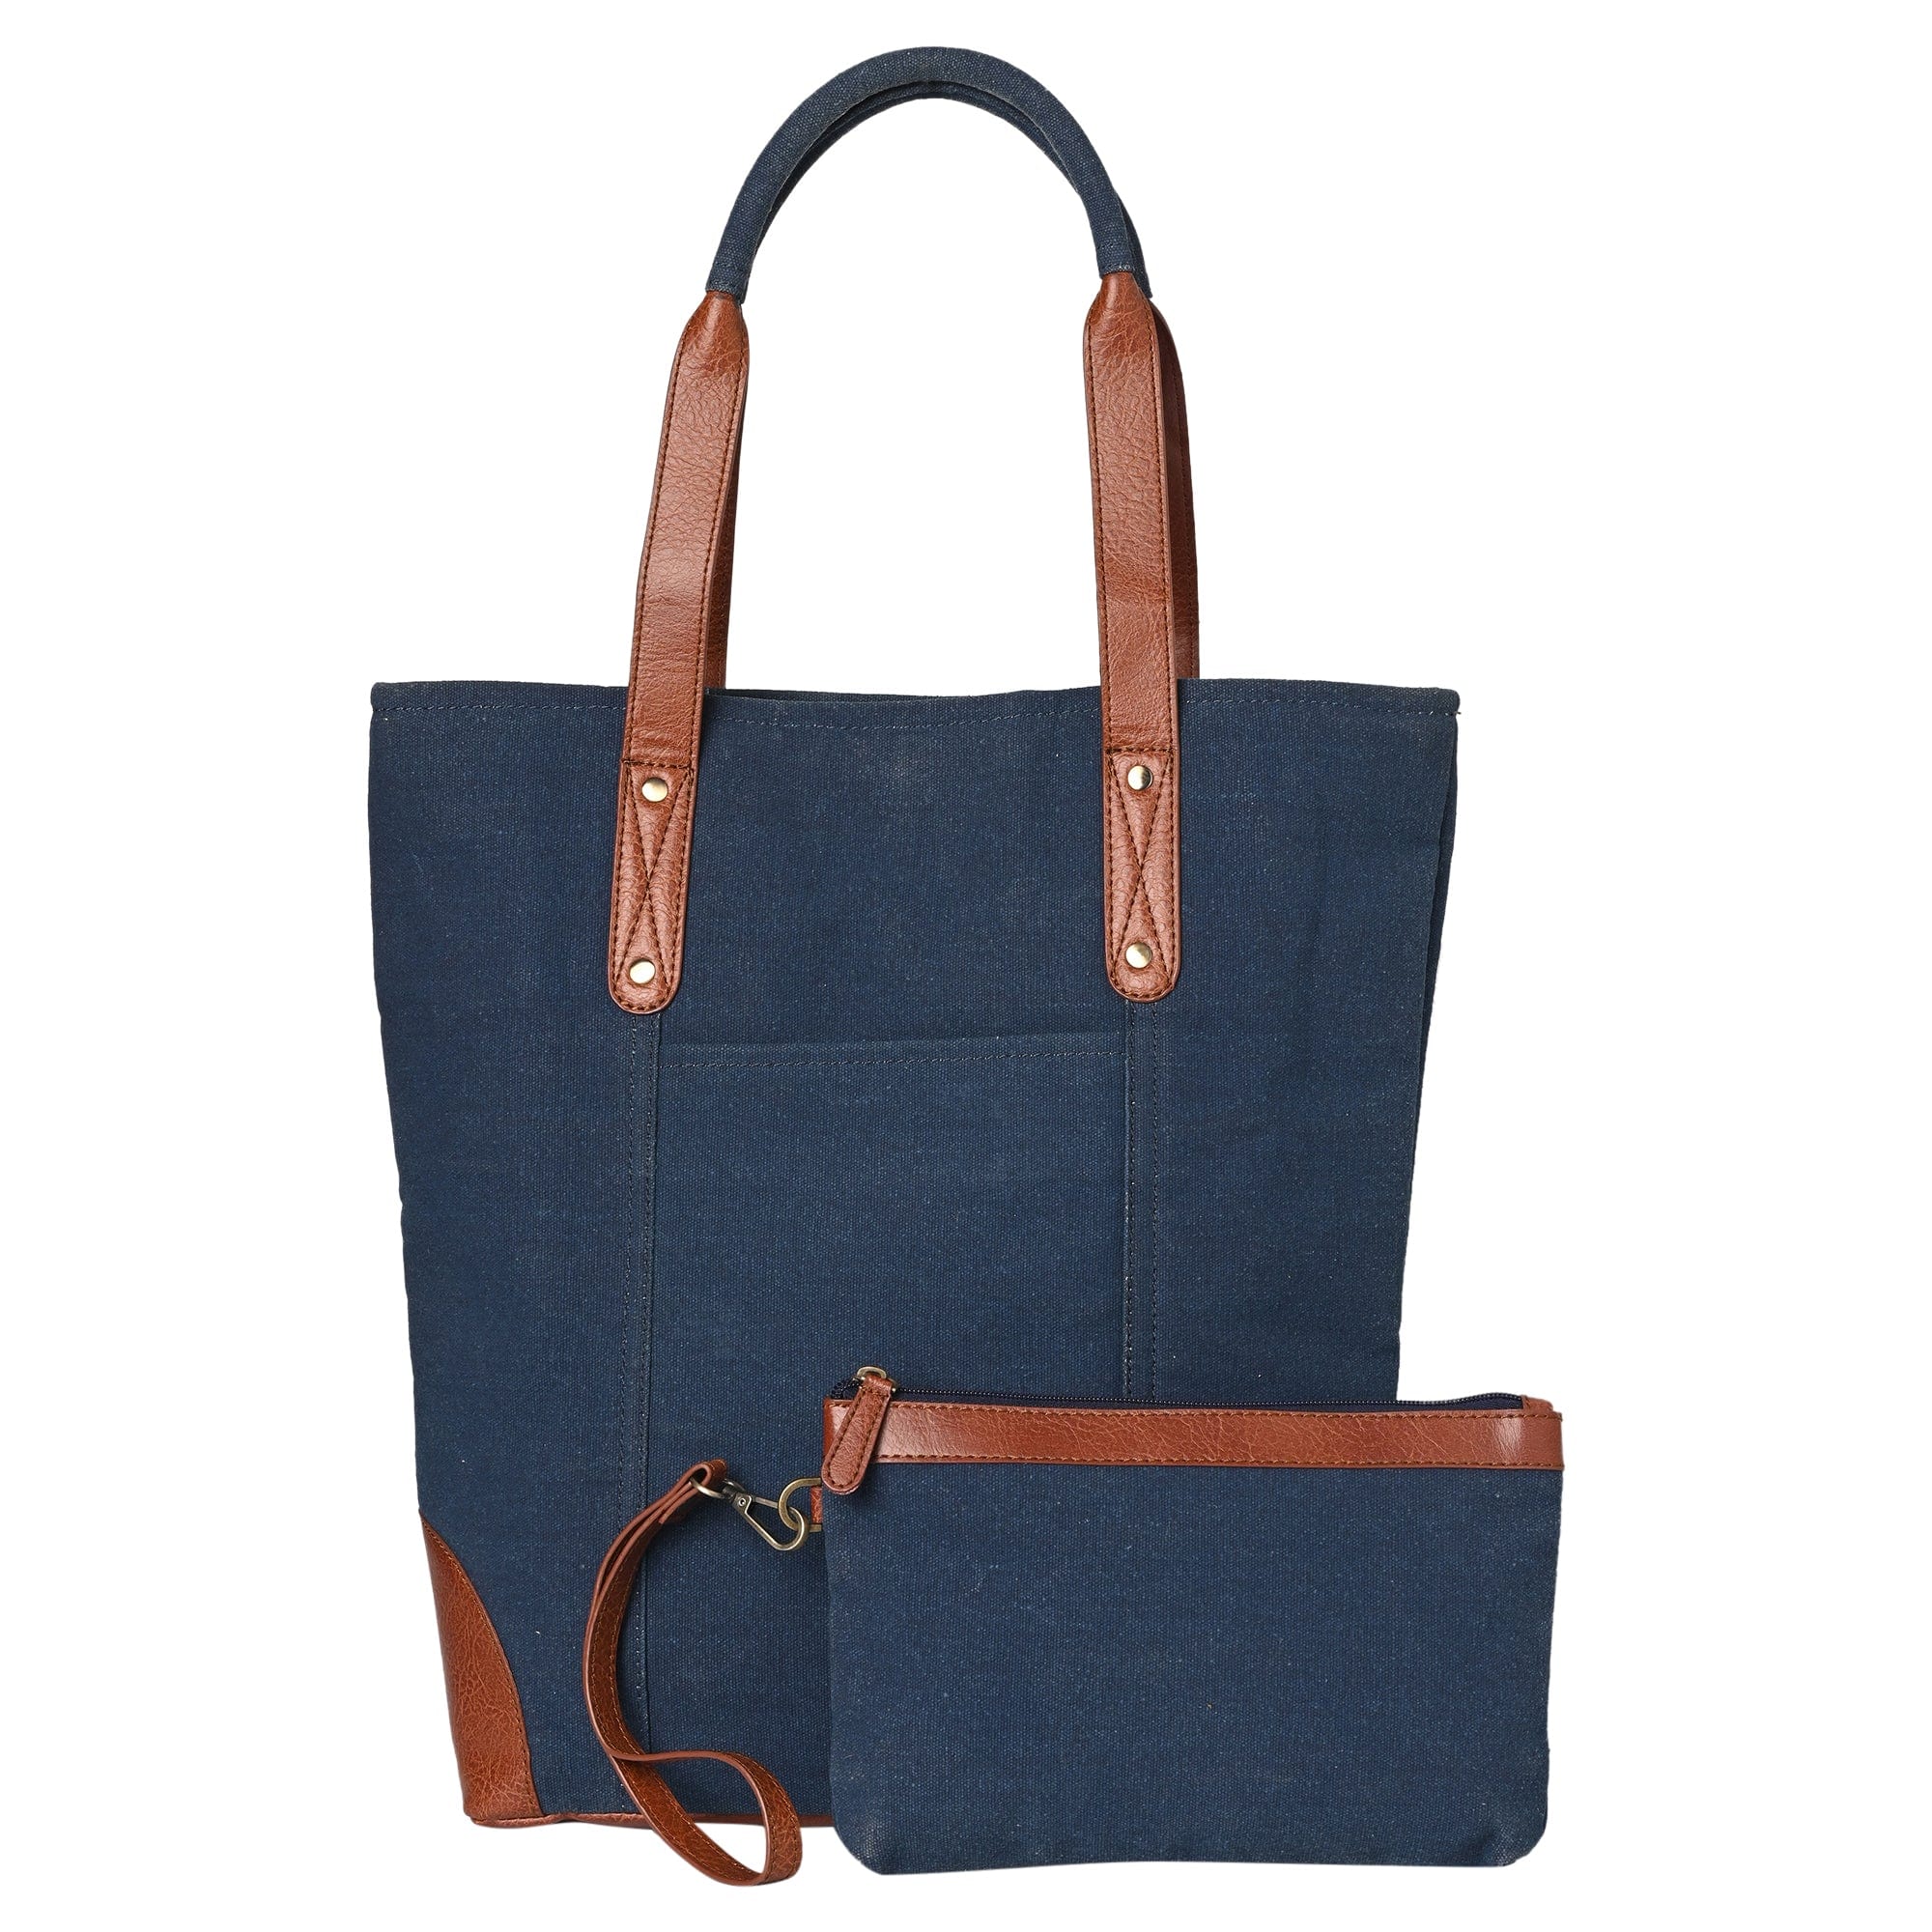 mona b bag mona b large canvas handbag for women tote bag for grocery shopping travel stylish vintage shoulder bags for women navy m 20215 nav 41747005800738 2048X2048 crop center